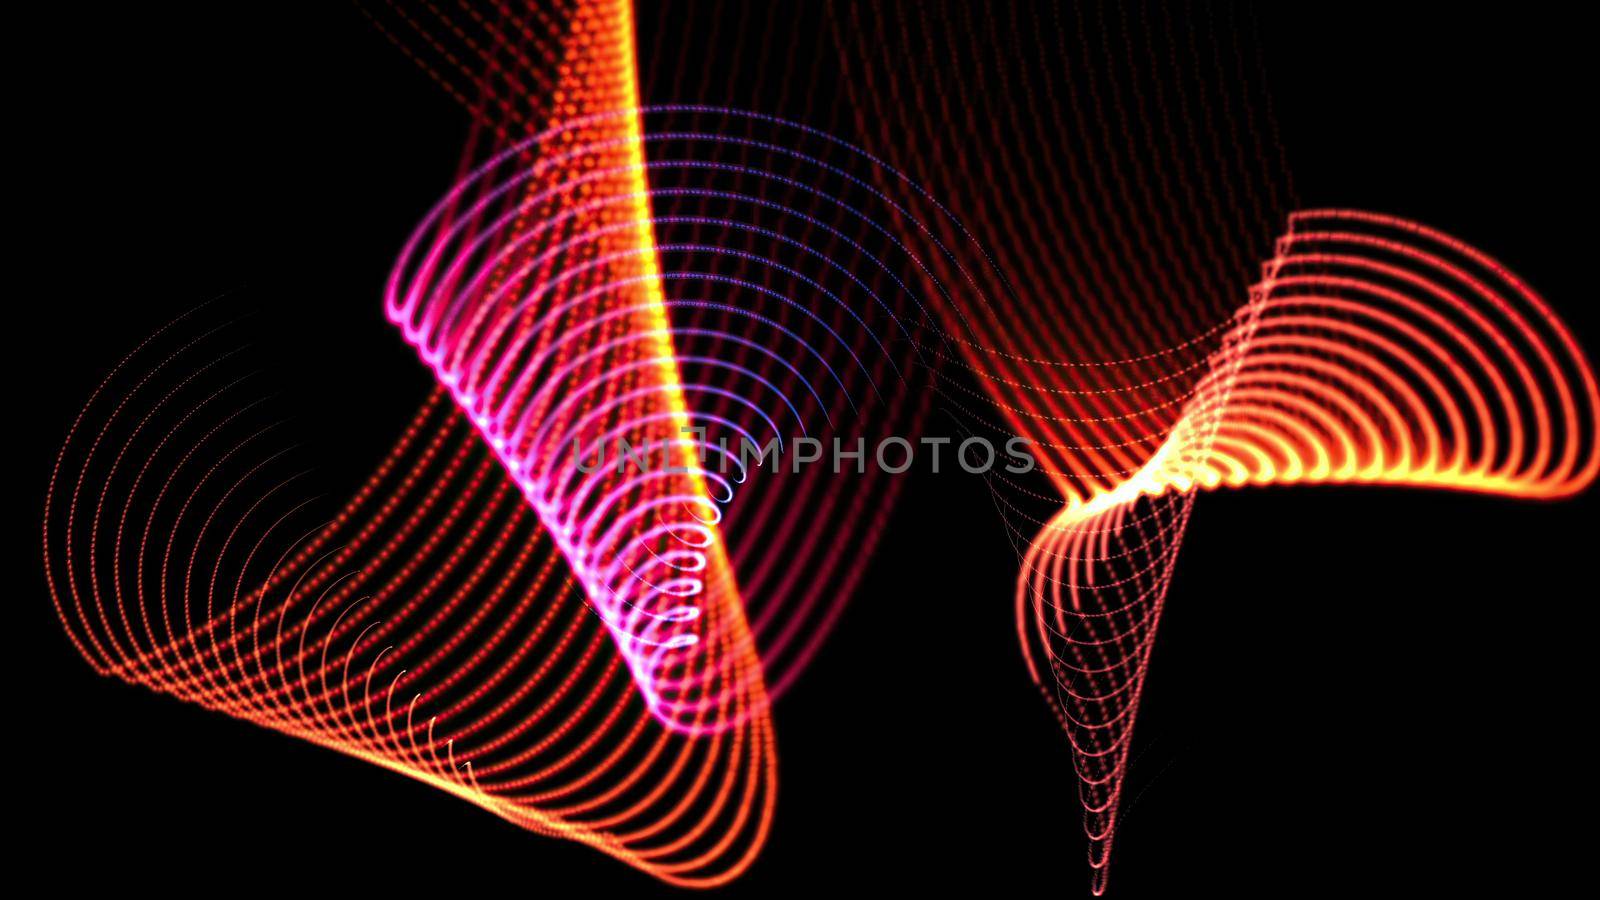 3d illustration - Hypnotic grid of lines creates geometric patterns. Computer graphics